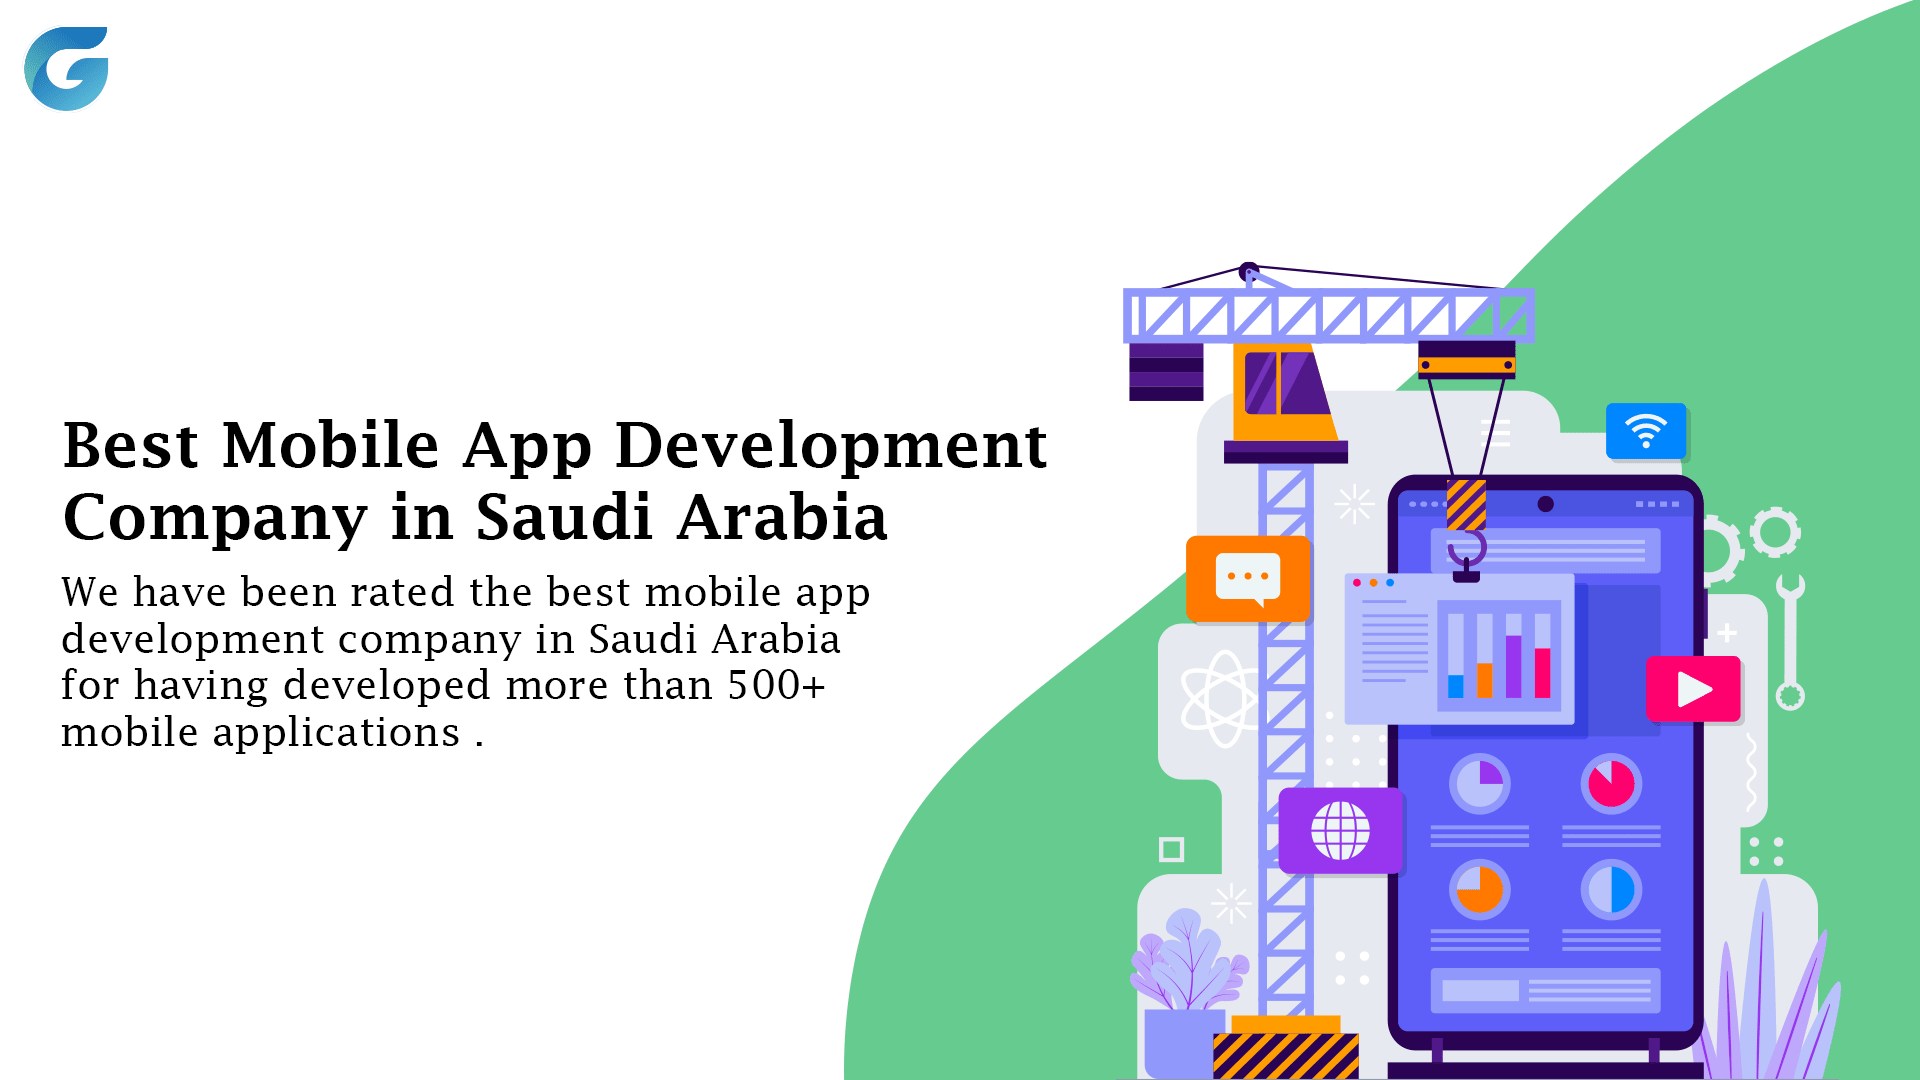 mobile app developers in riyadh app development company in riyadh mobile app development in saudi arabia